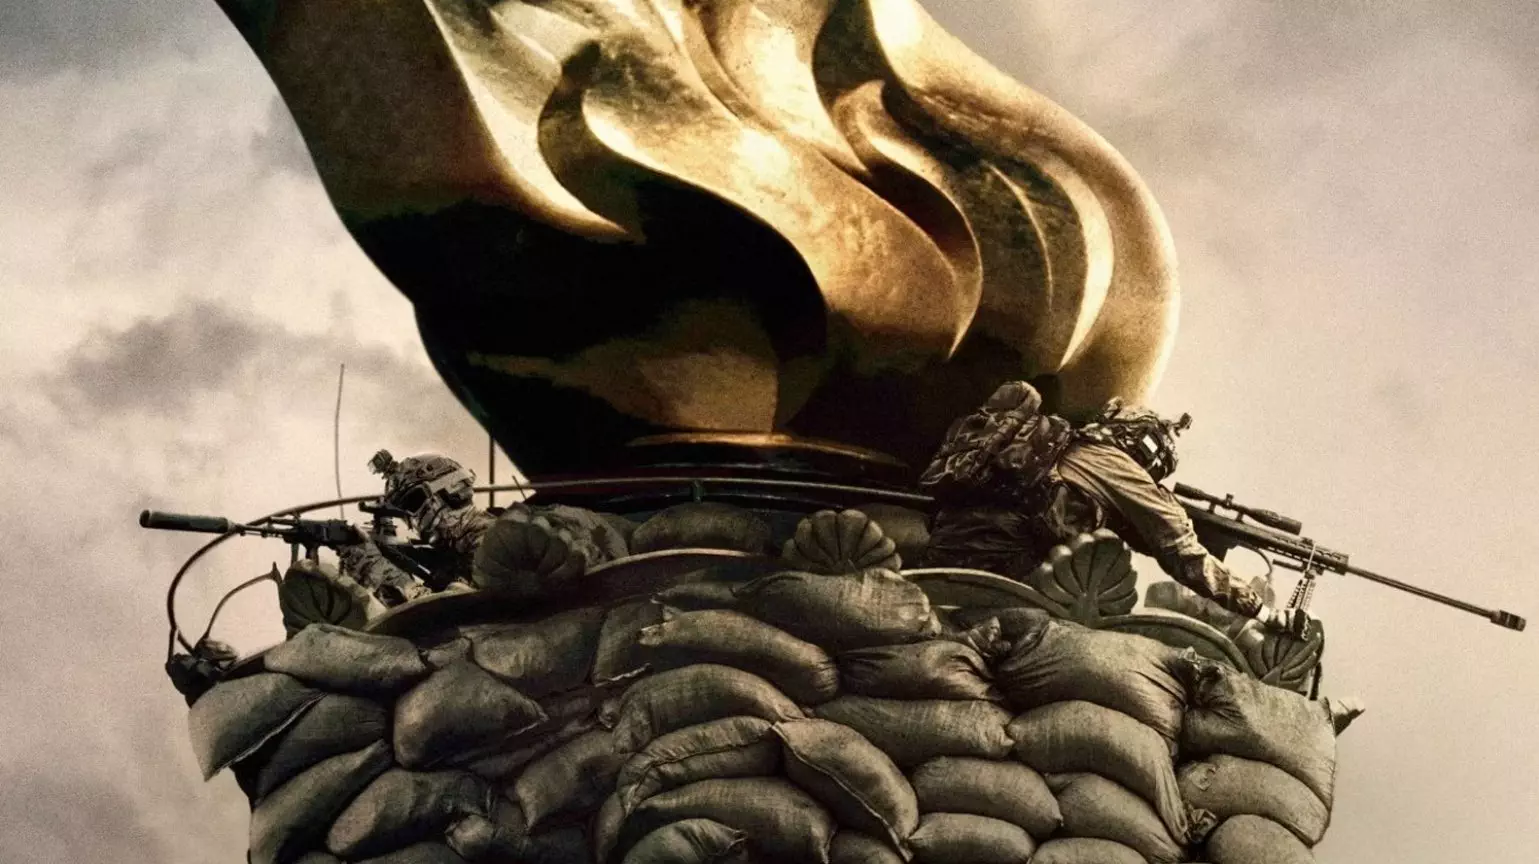 America prepares for Civil War in second trailer for Alex Garland's new film